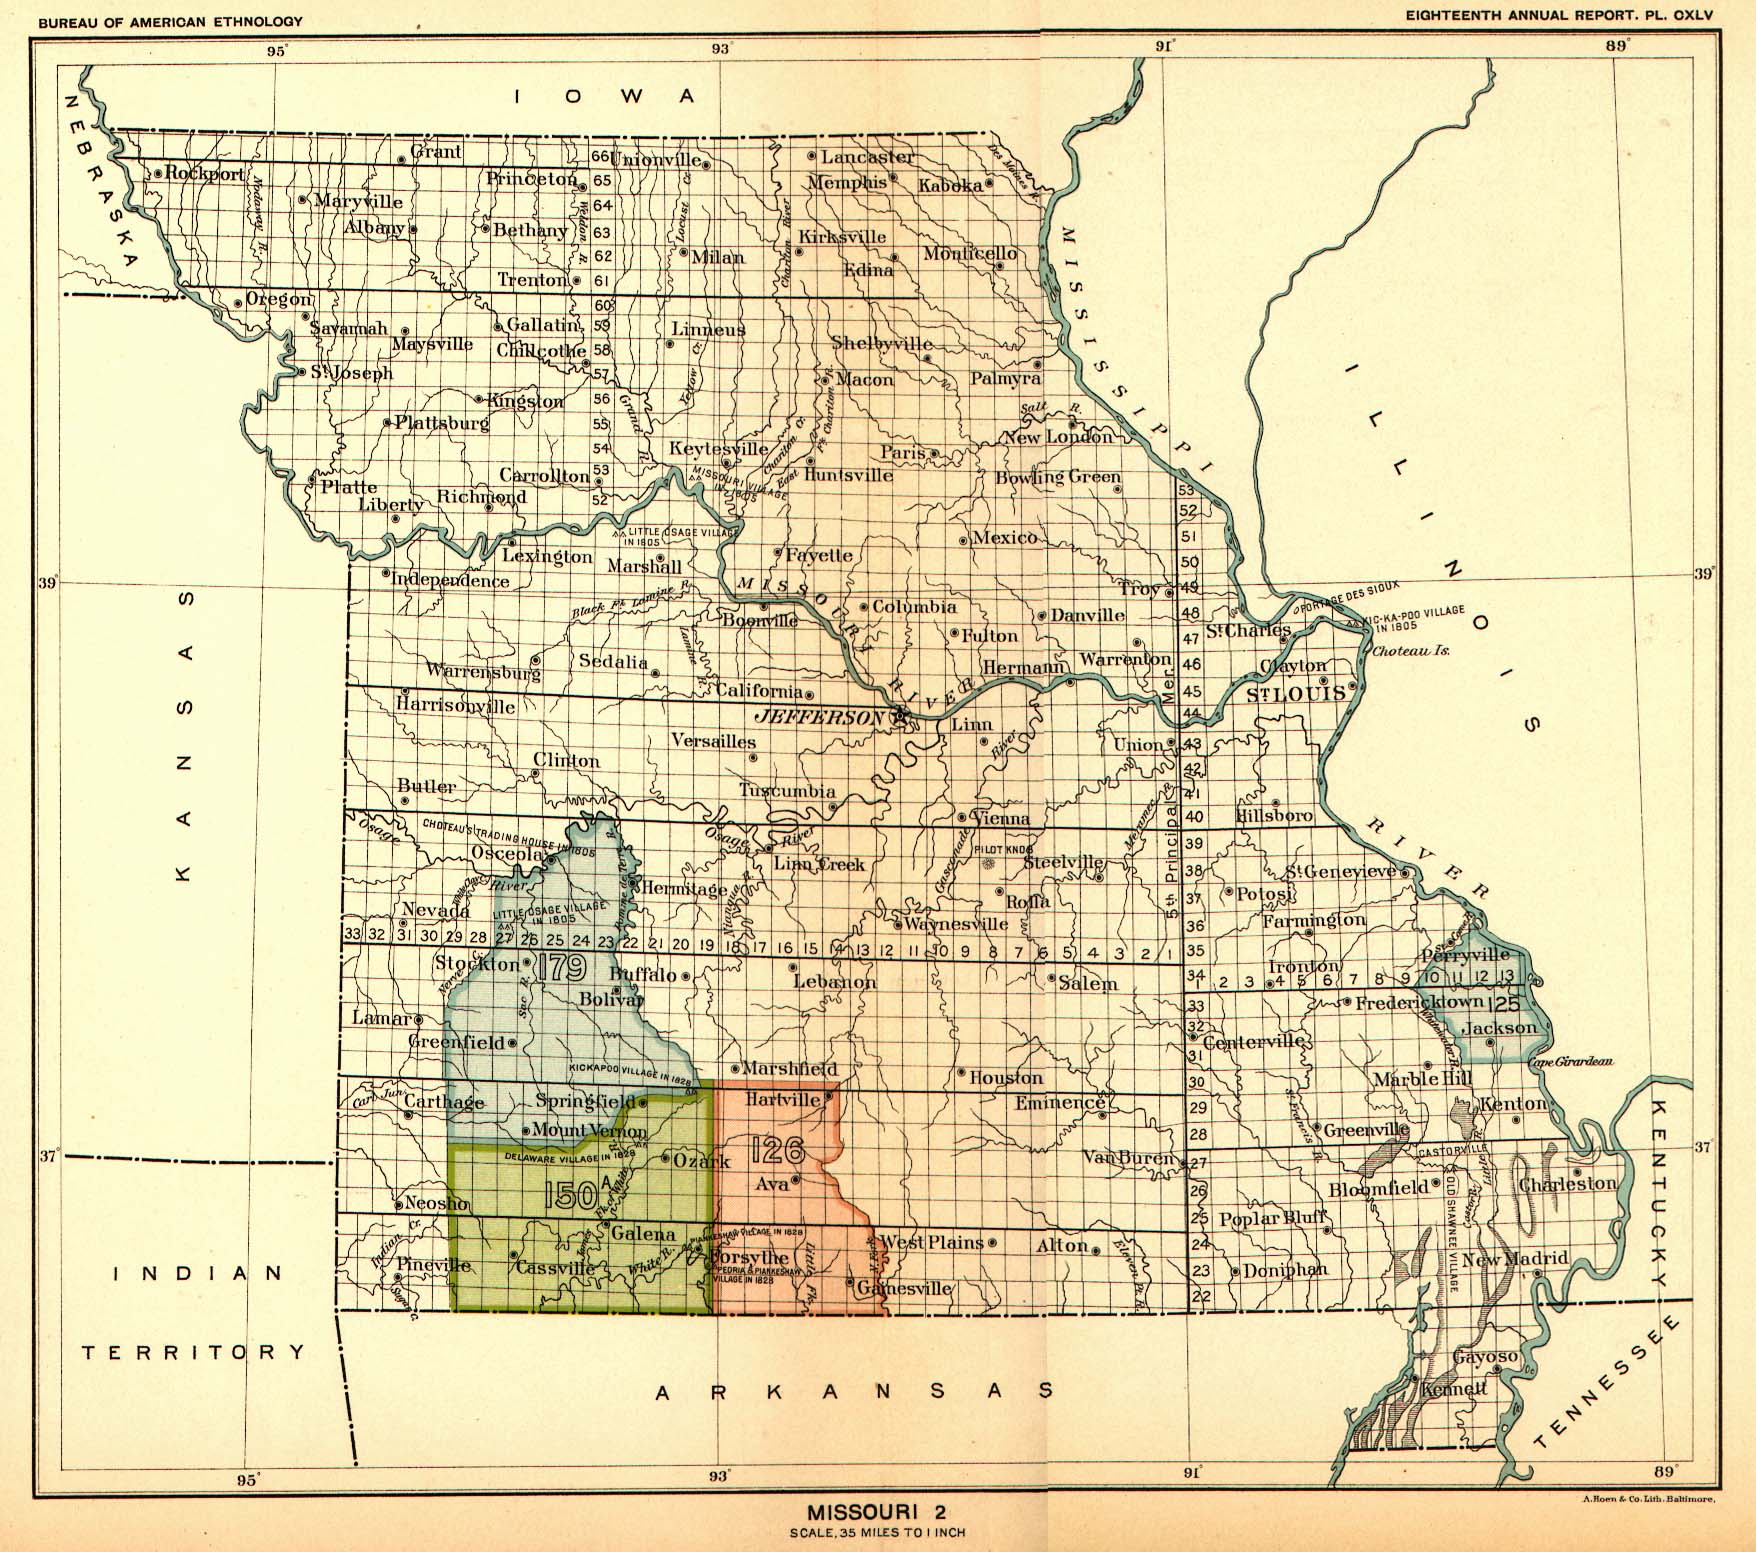 Missouri 2, Map 38